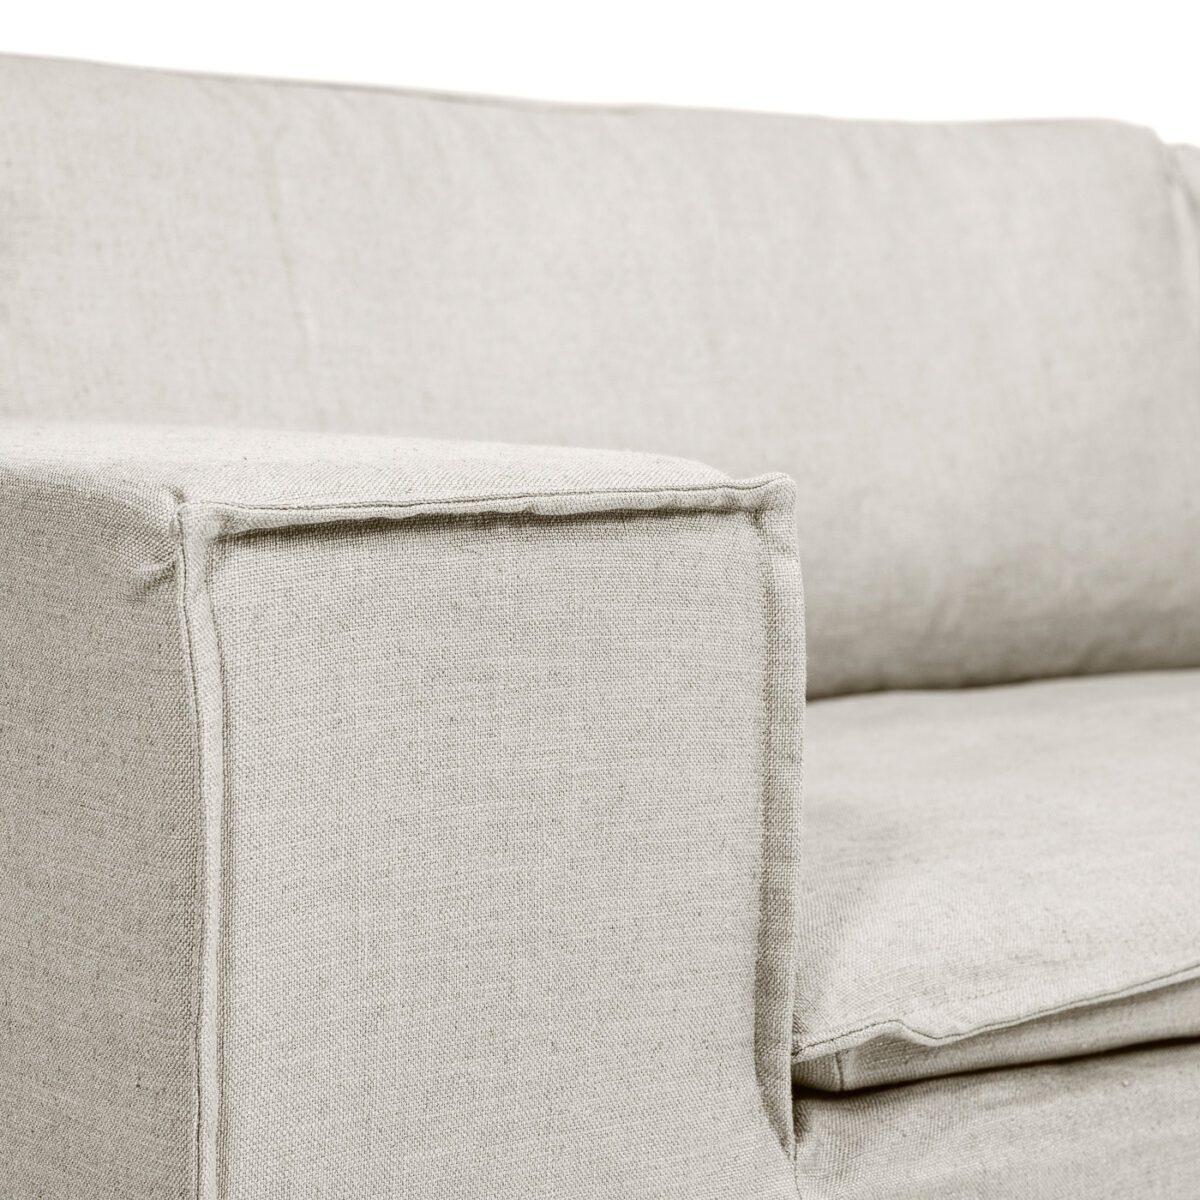 Luca Grande 2-Seat Sofa Off White